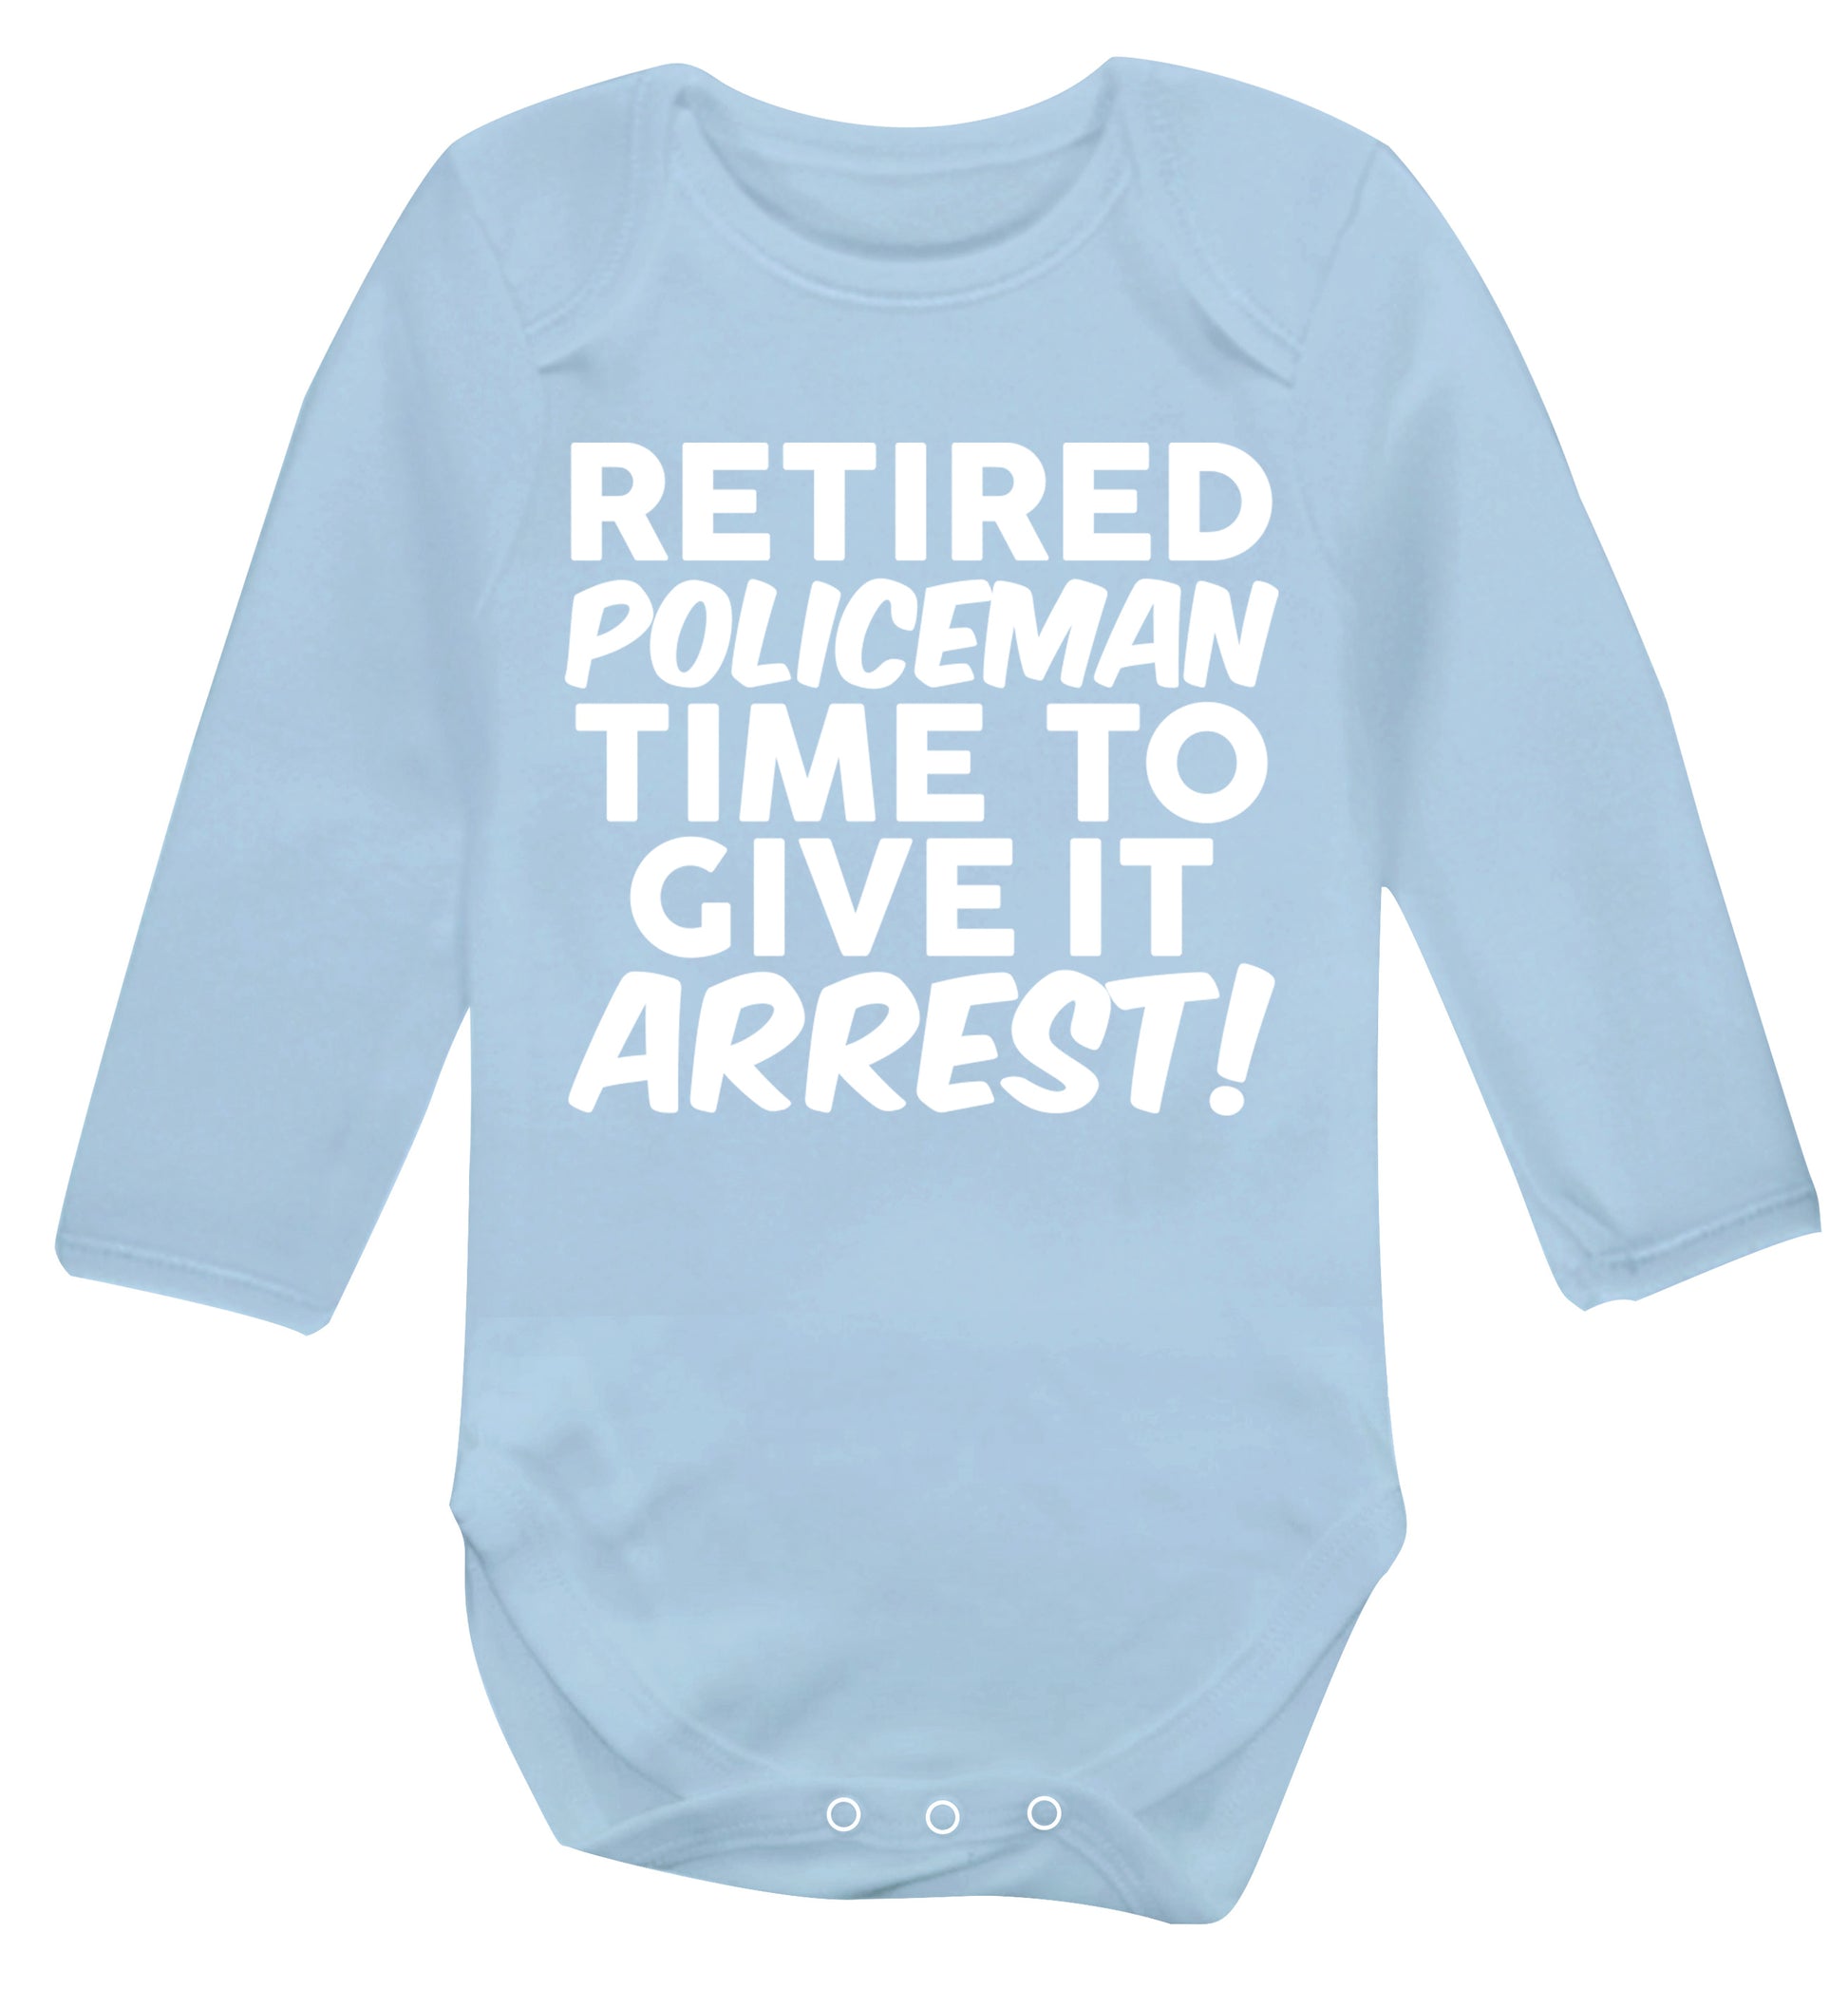 Retired policeman give it arresst! Baby Vest long sleeved pale blue 6-12 months